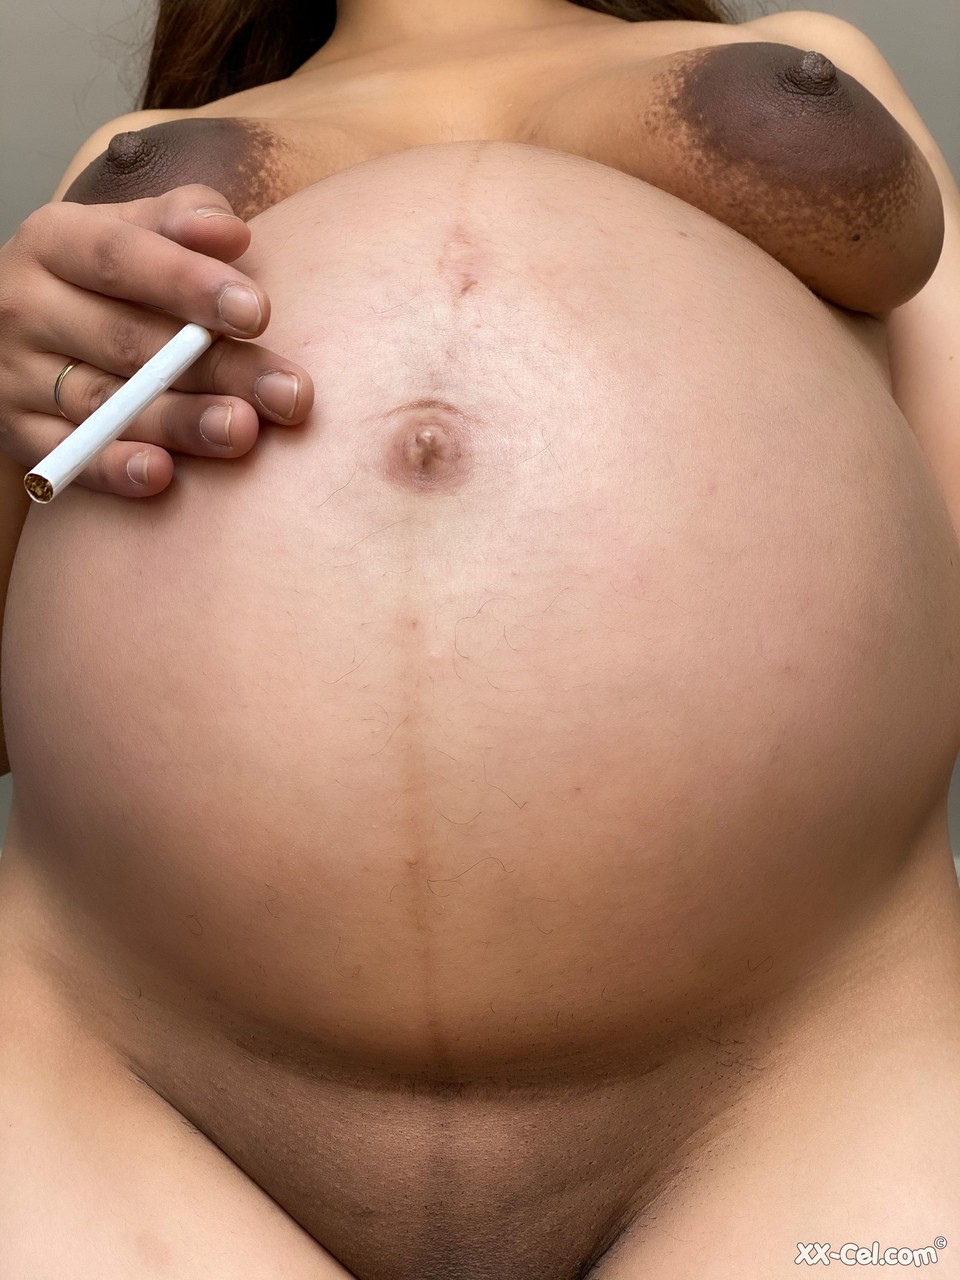 Pregnant smoker Leila teasing nude with her bulging tummy & her dark nipples 포르노 사진 #424132694 | XX Cel Pics, Leila, Pregnant, 모바일 포르노